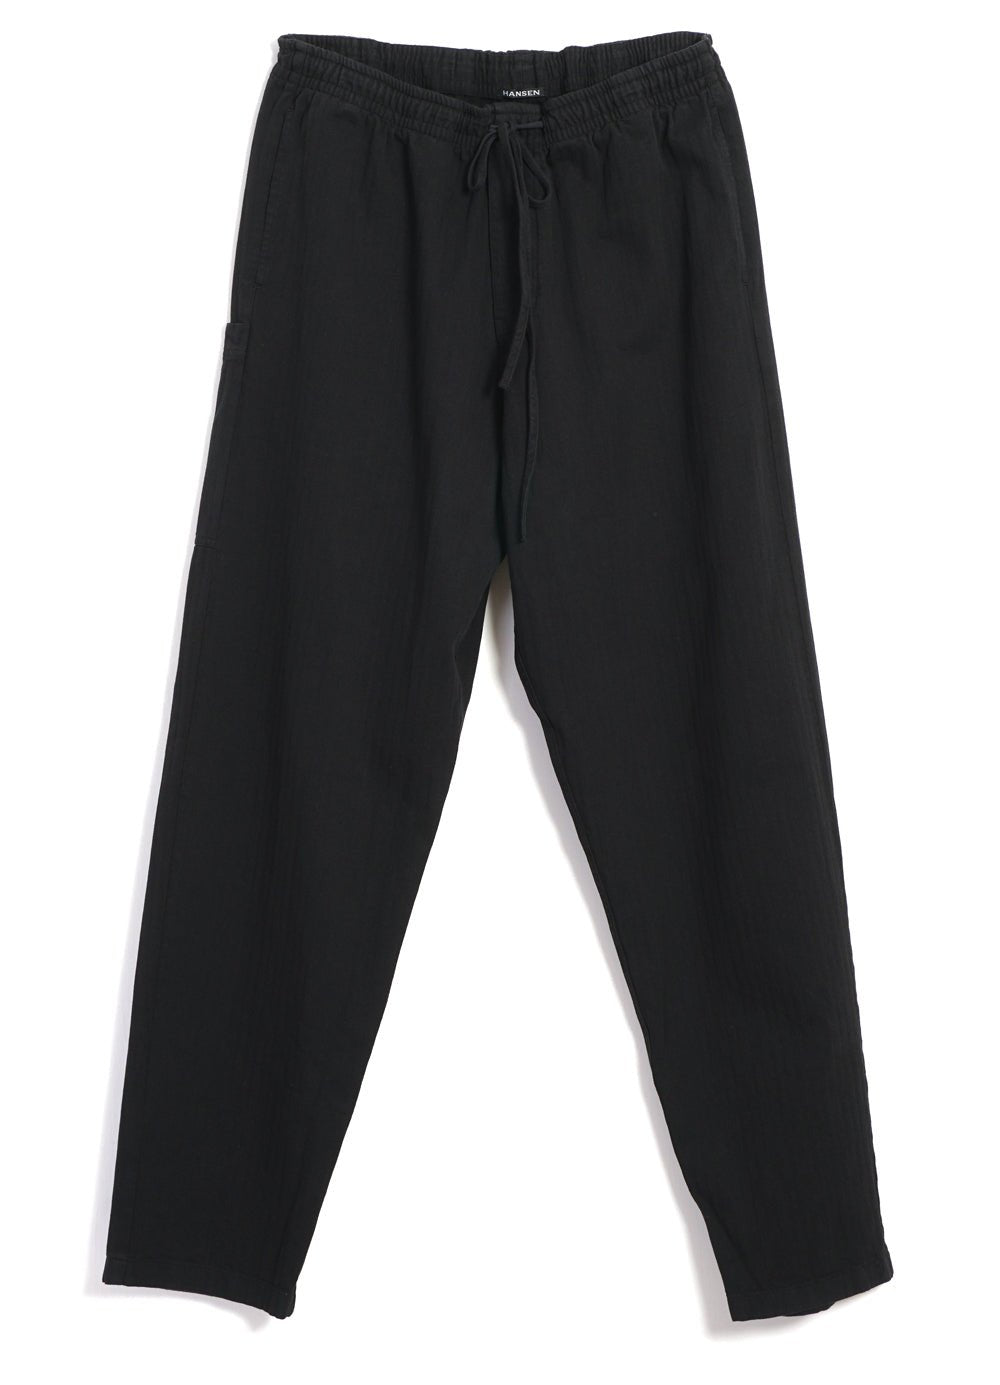 HANSEN GARMENTS - JACK | Casual Drawstring Pants | Black - HANSEN Garments